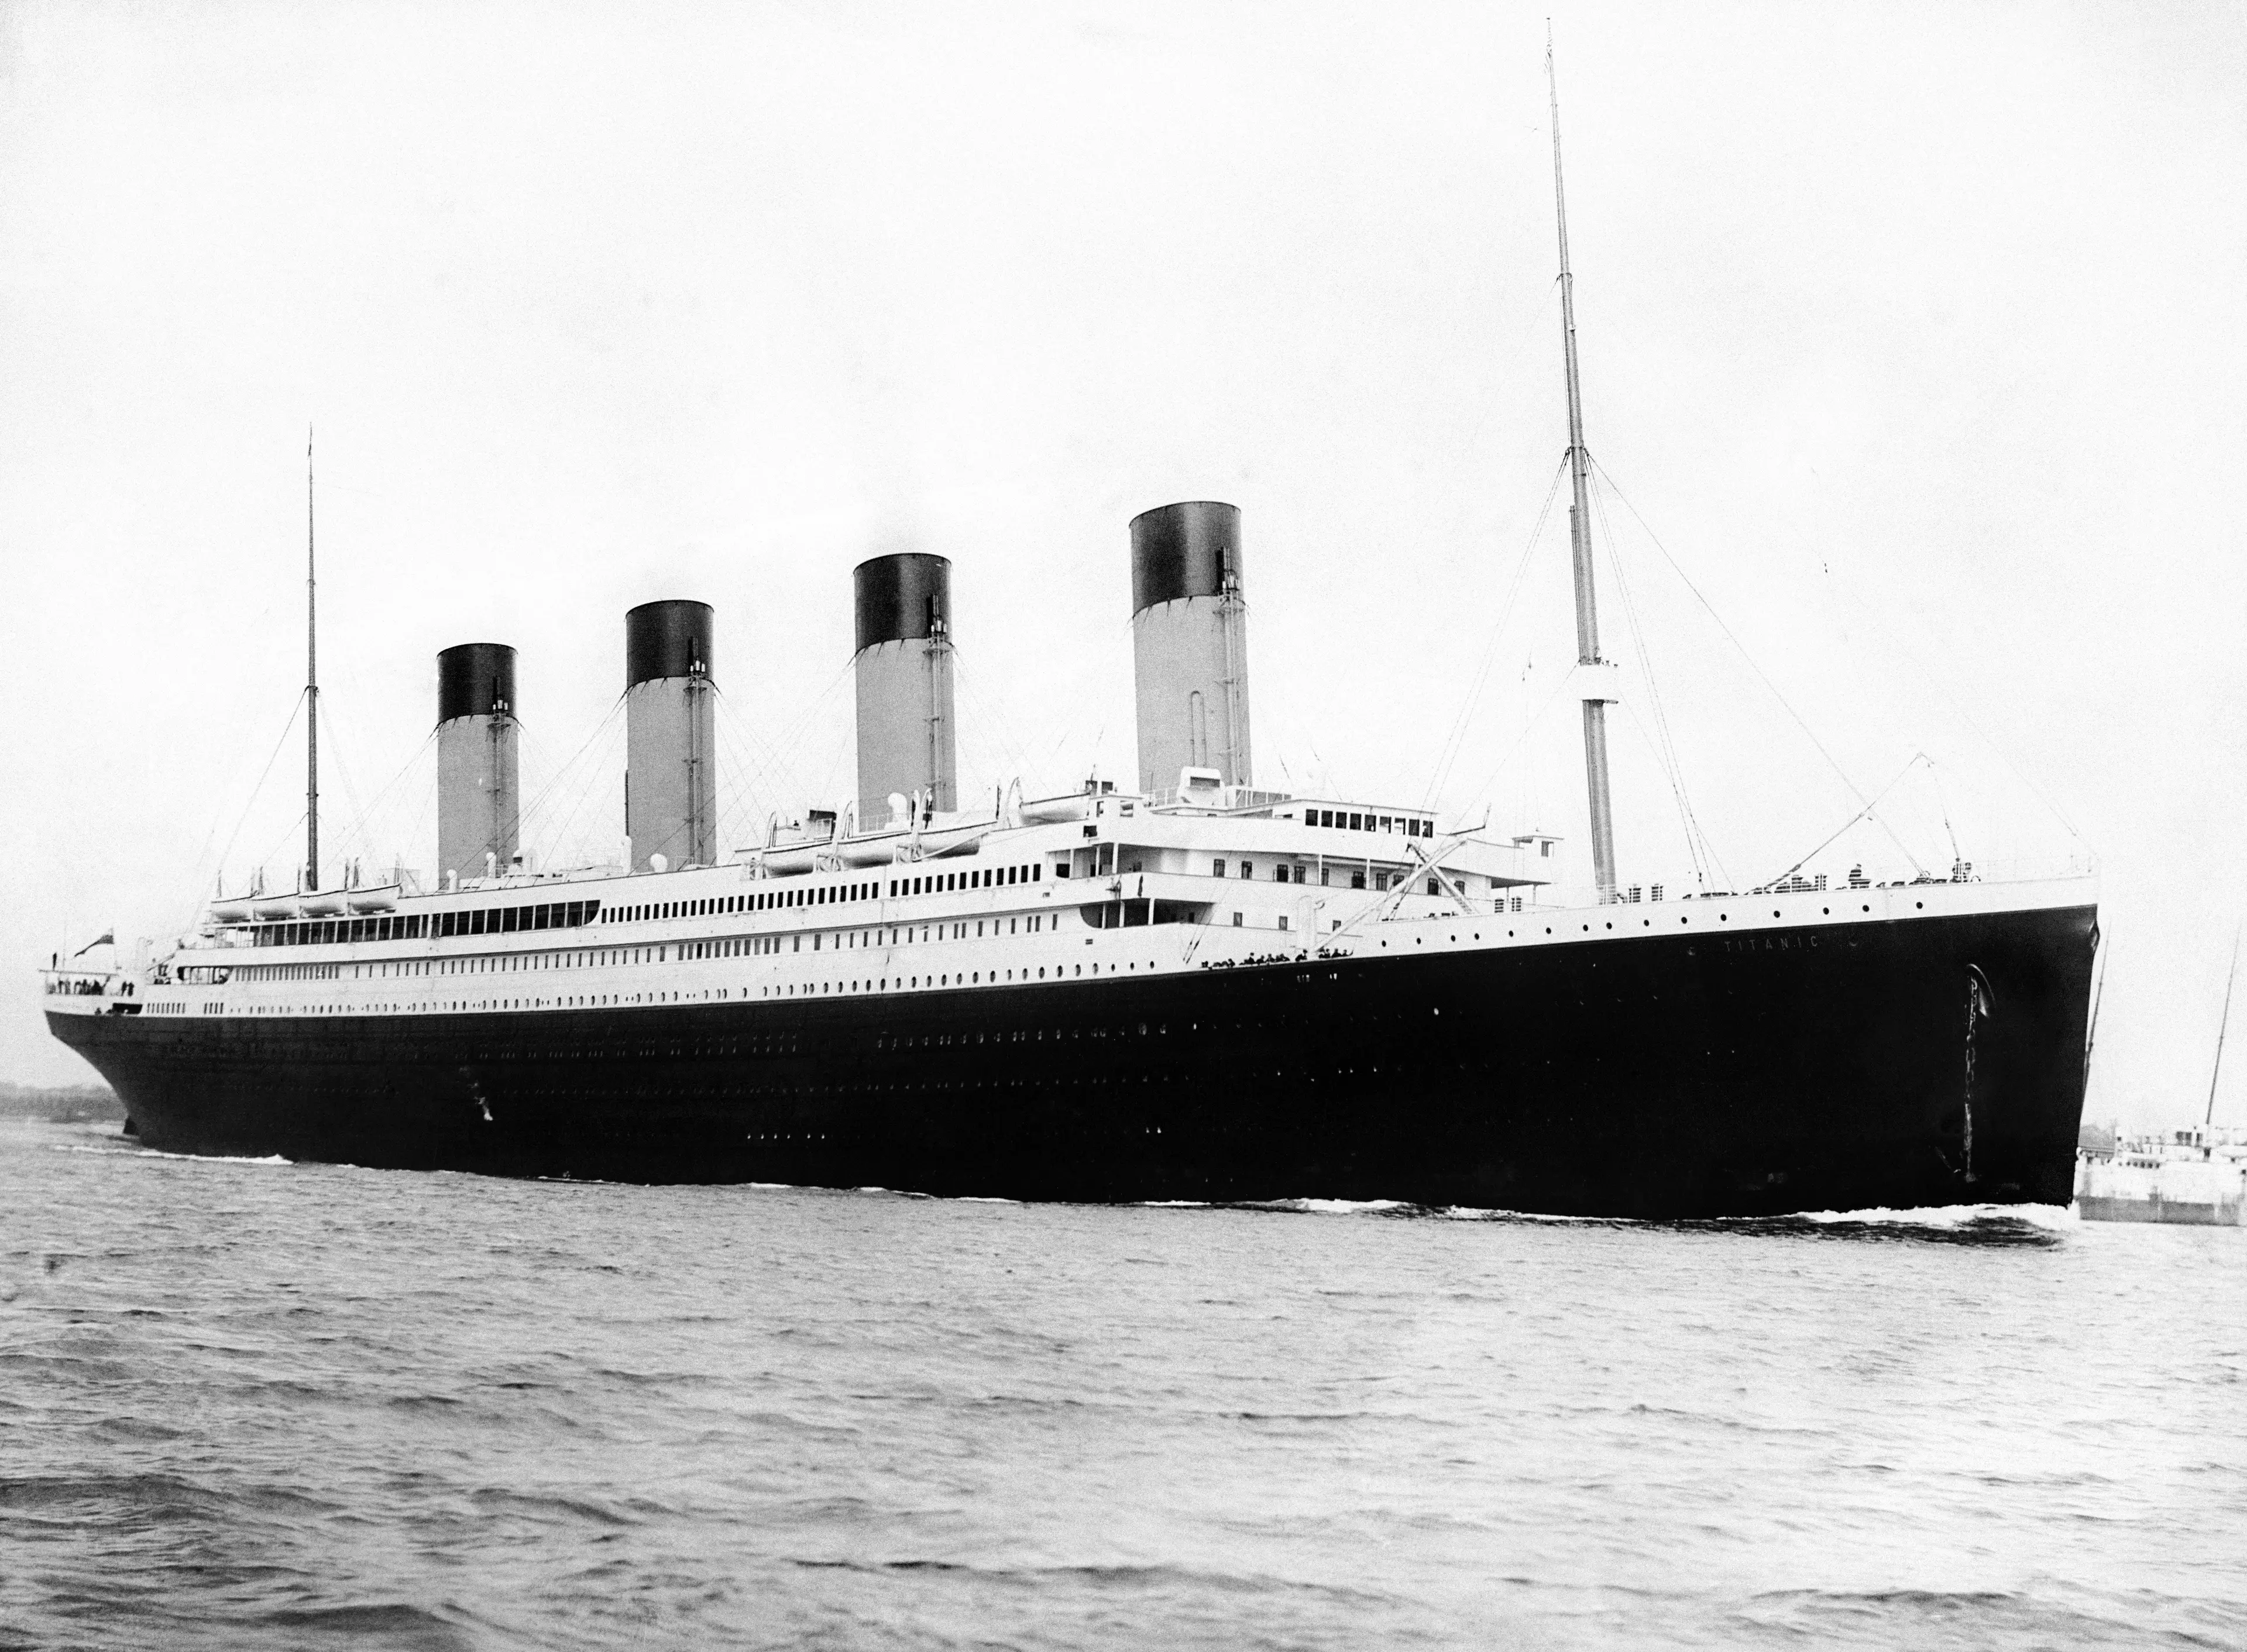 The Titanic sank in 1912.